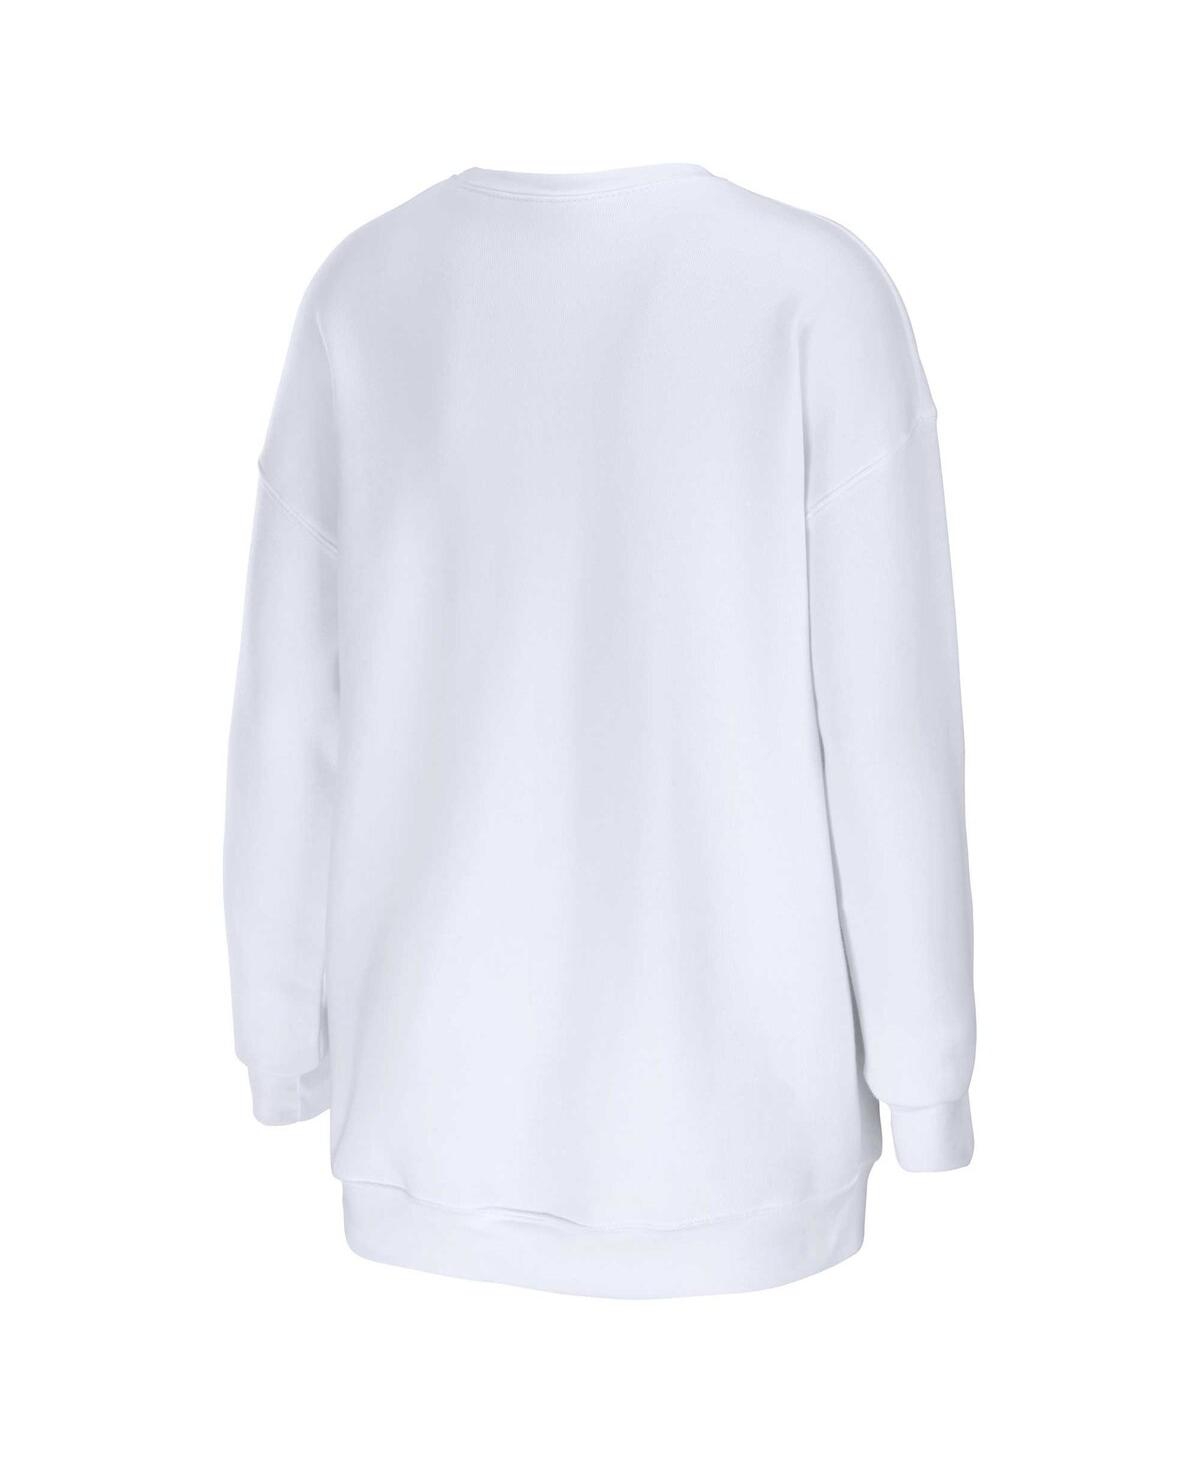 Shop Wear By Erin Andrews Women's  White Baltimore Ravens Domestic Pullover Sweatshirt